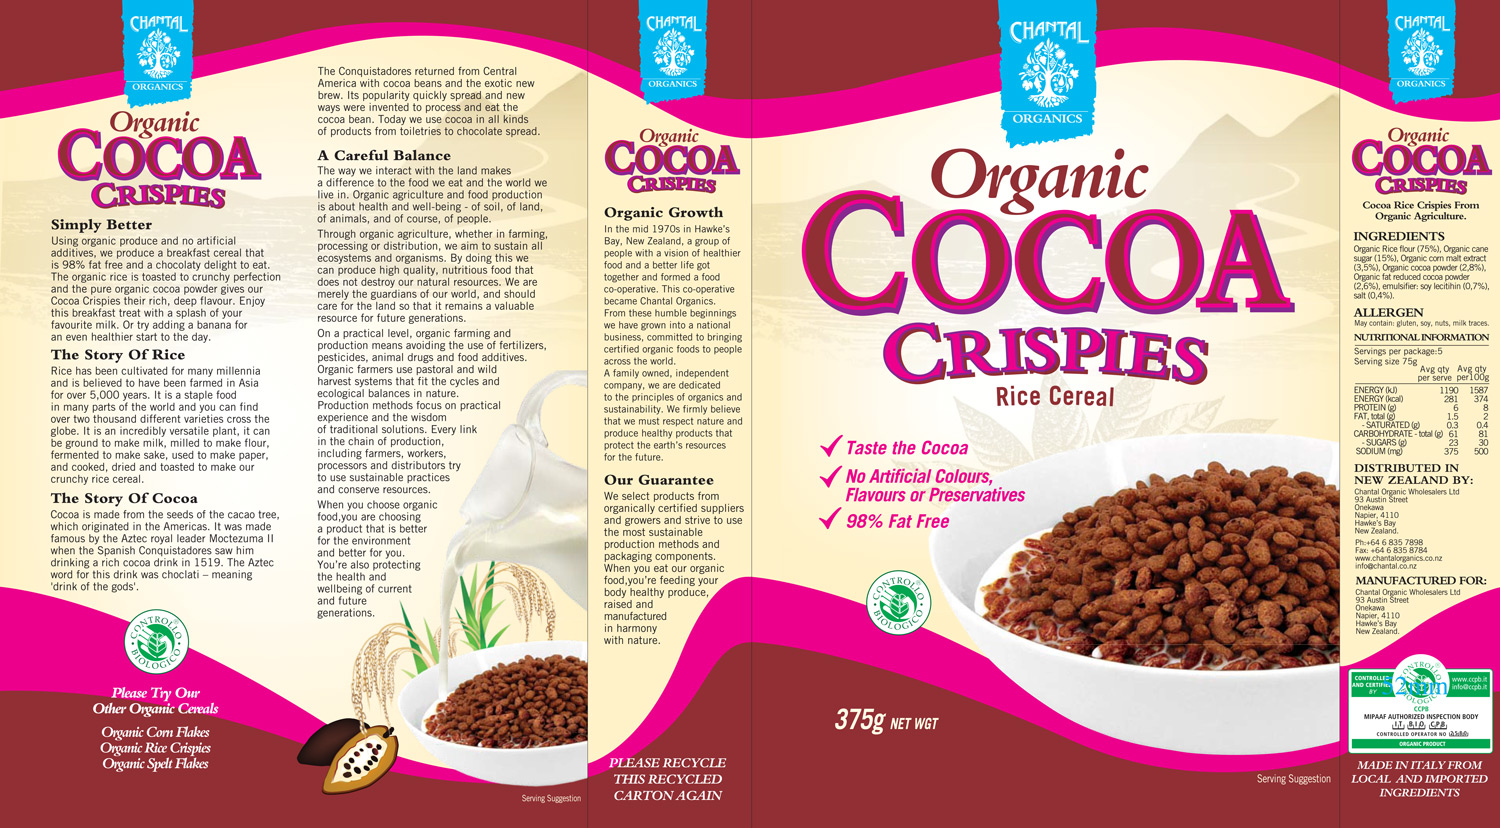 Cocoa-Crispies.jpg